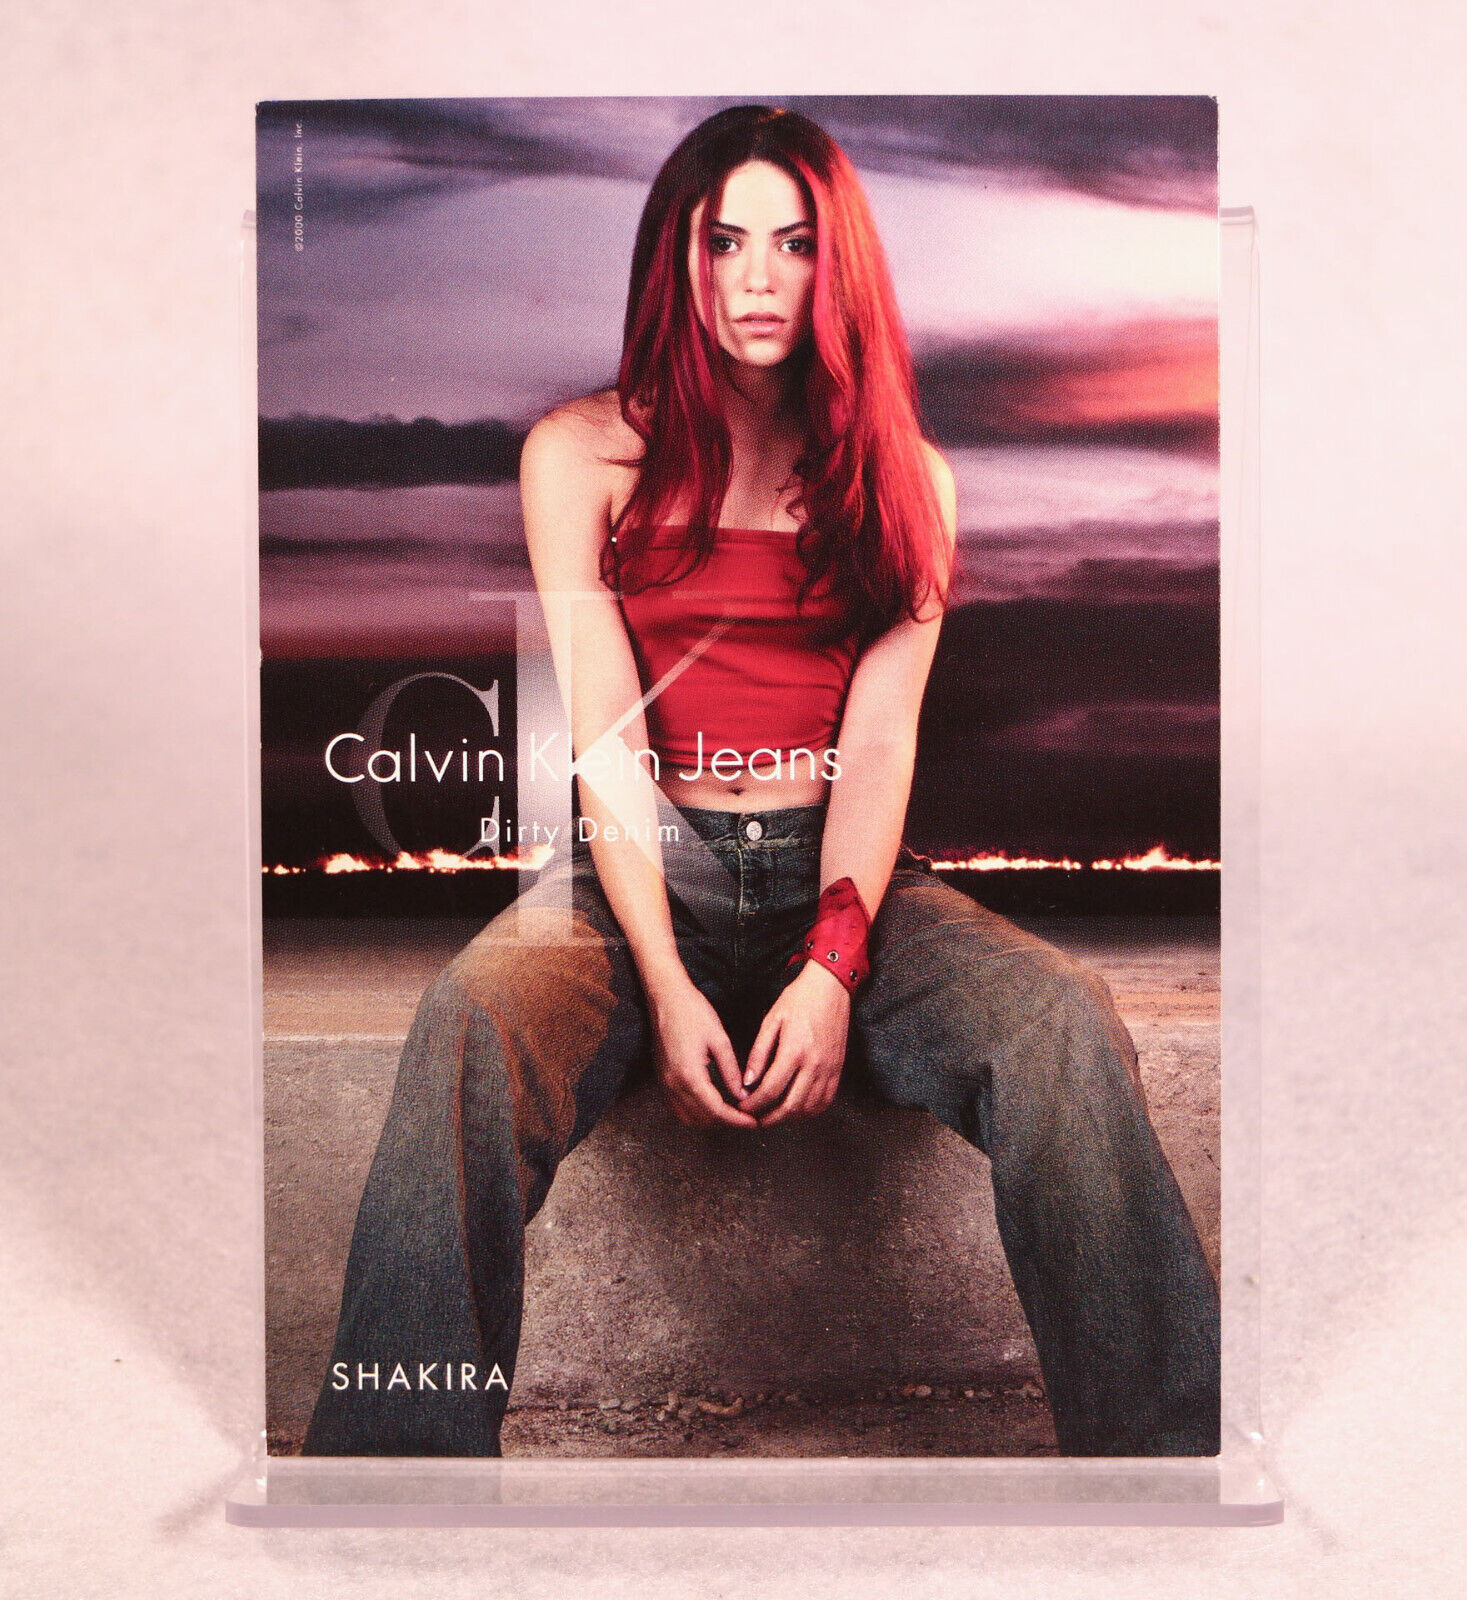 SHAKIRA Promotional promo Postcards Advertising CALVIN KLEIN JEANS